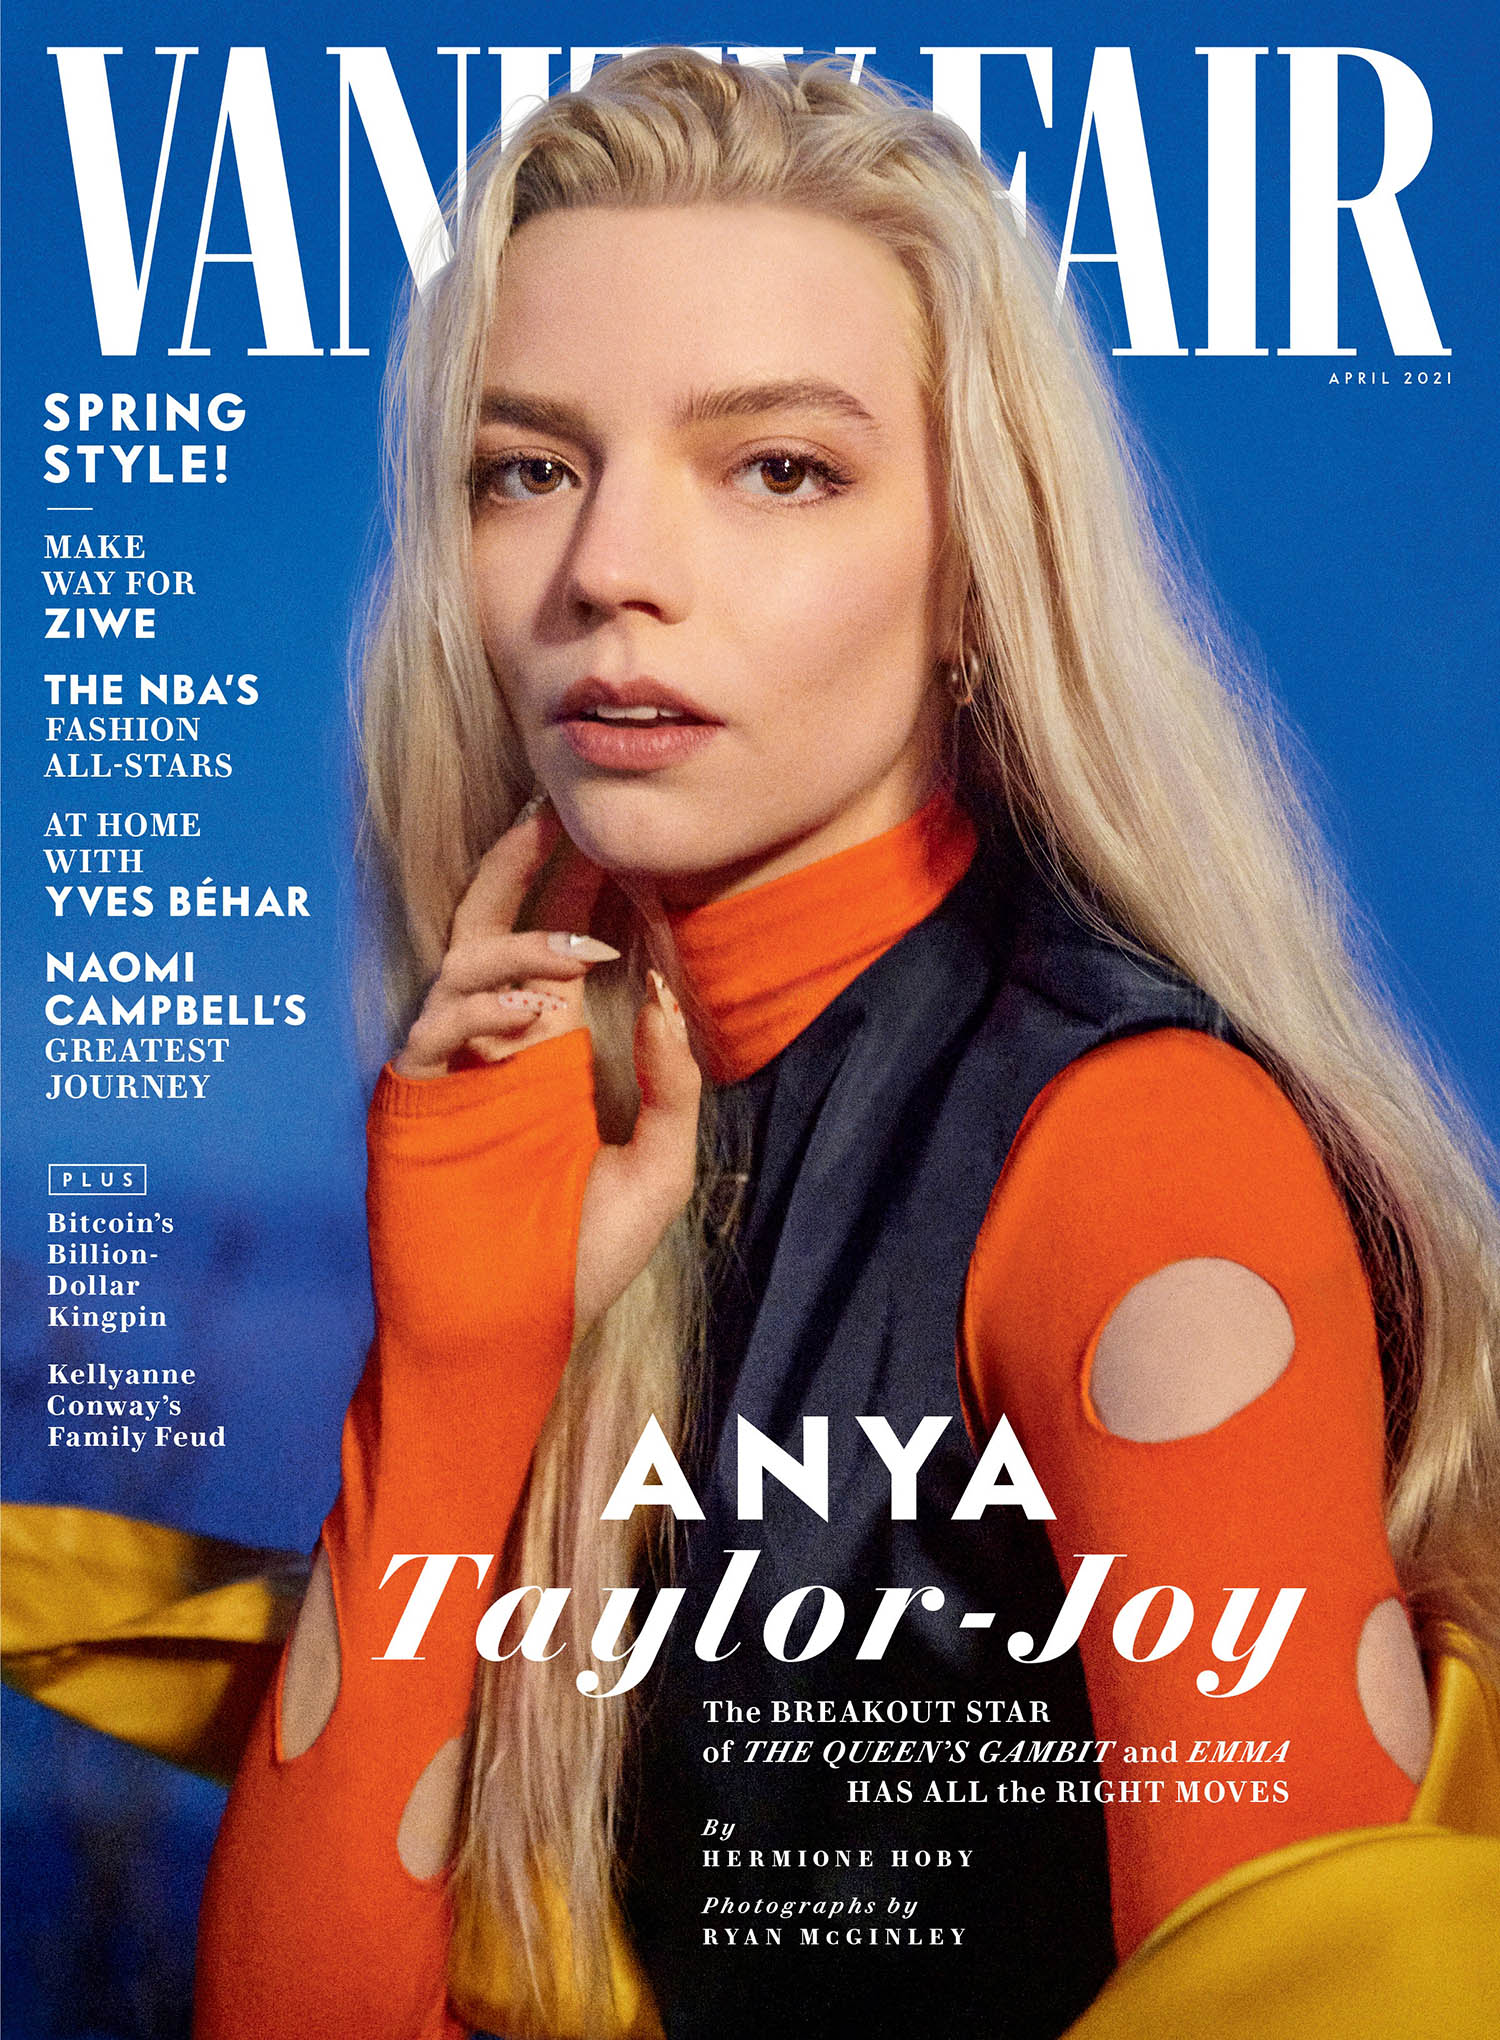 Anya Taylor-Joy covers Vanity Fair April 2021 by Ryan McGinley